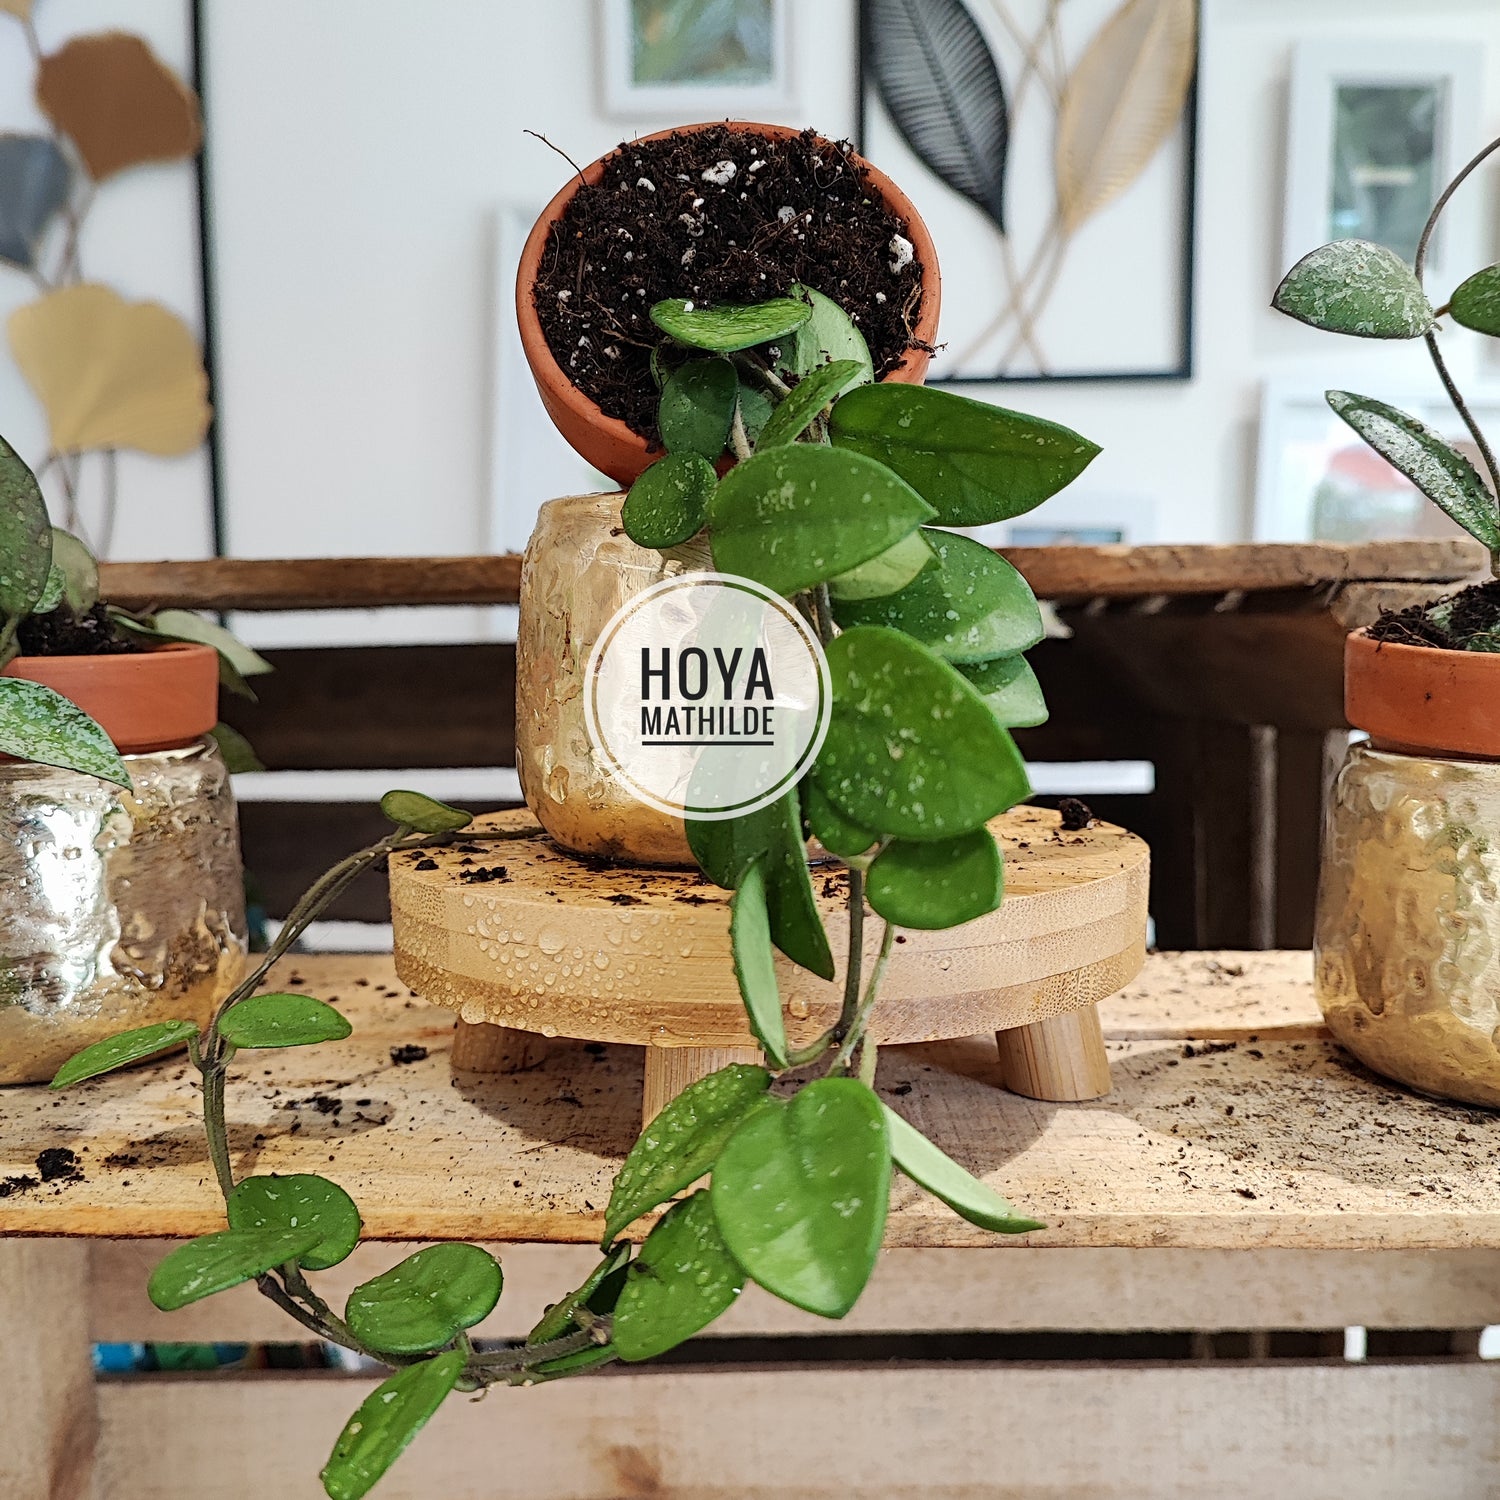 Hoya lot of three, a cutting of hoya mathilde, hoya sigillatis and hoya krohniana splash